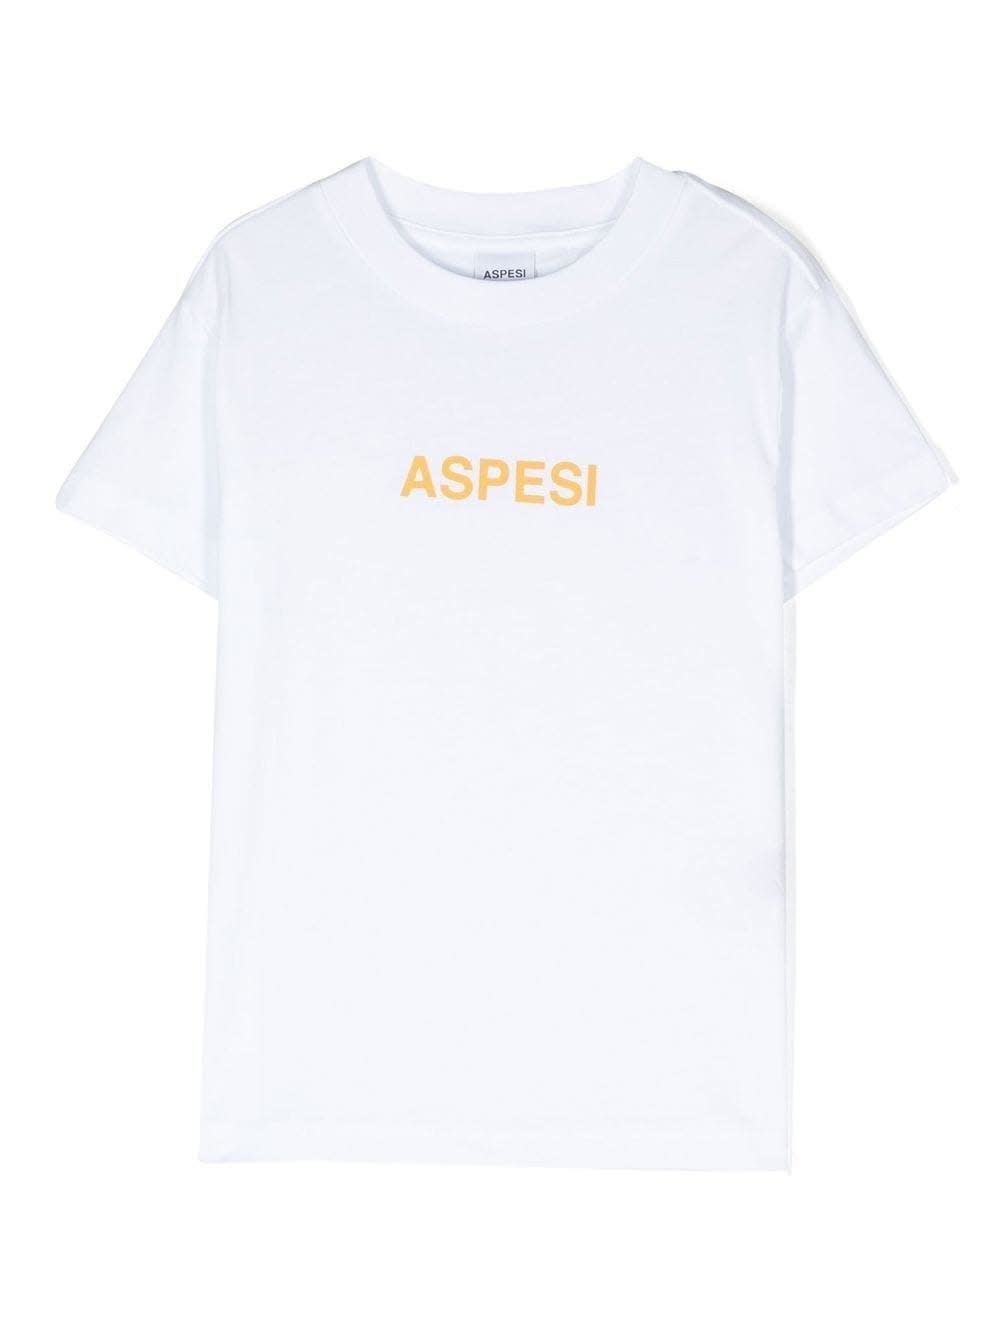 ASPESI PRINTED T-SHIRT